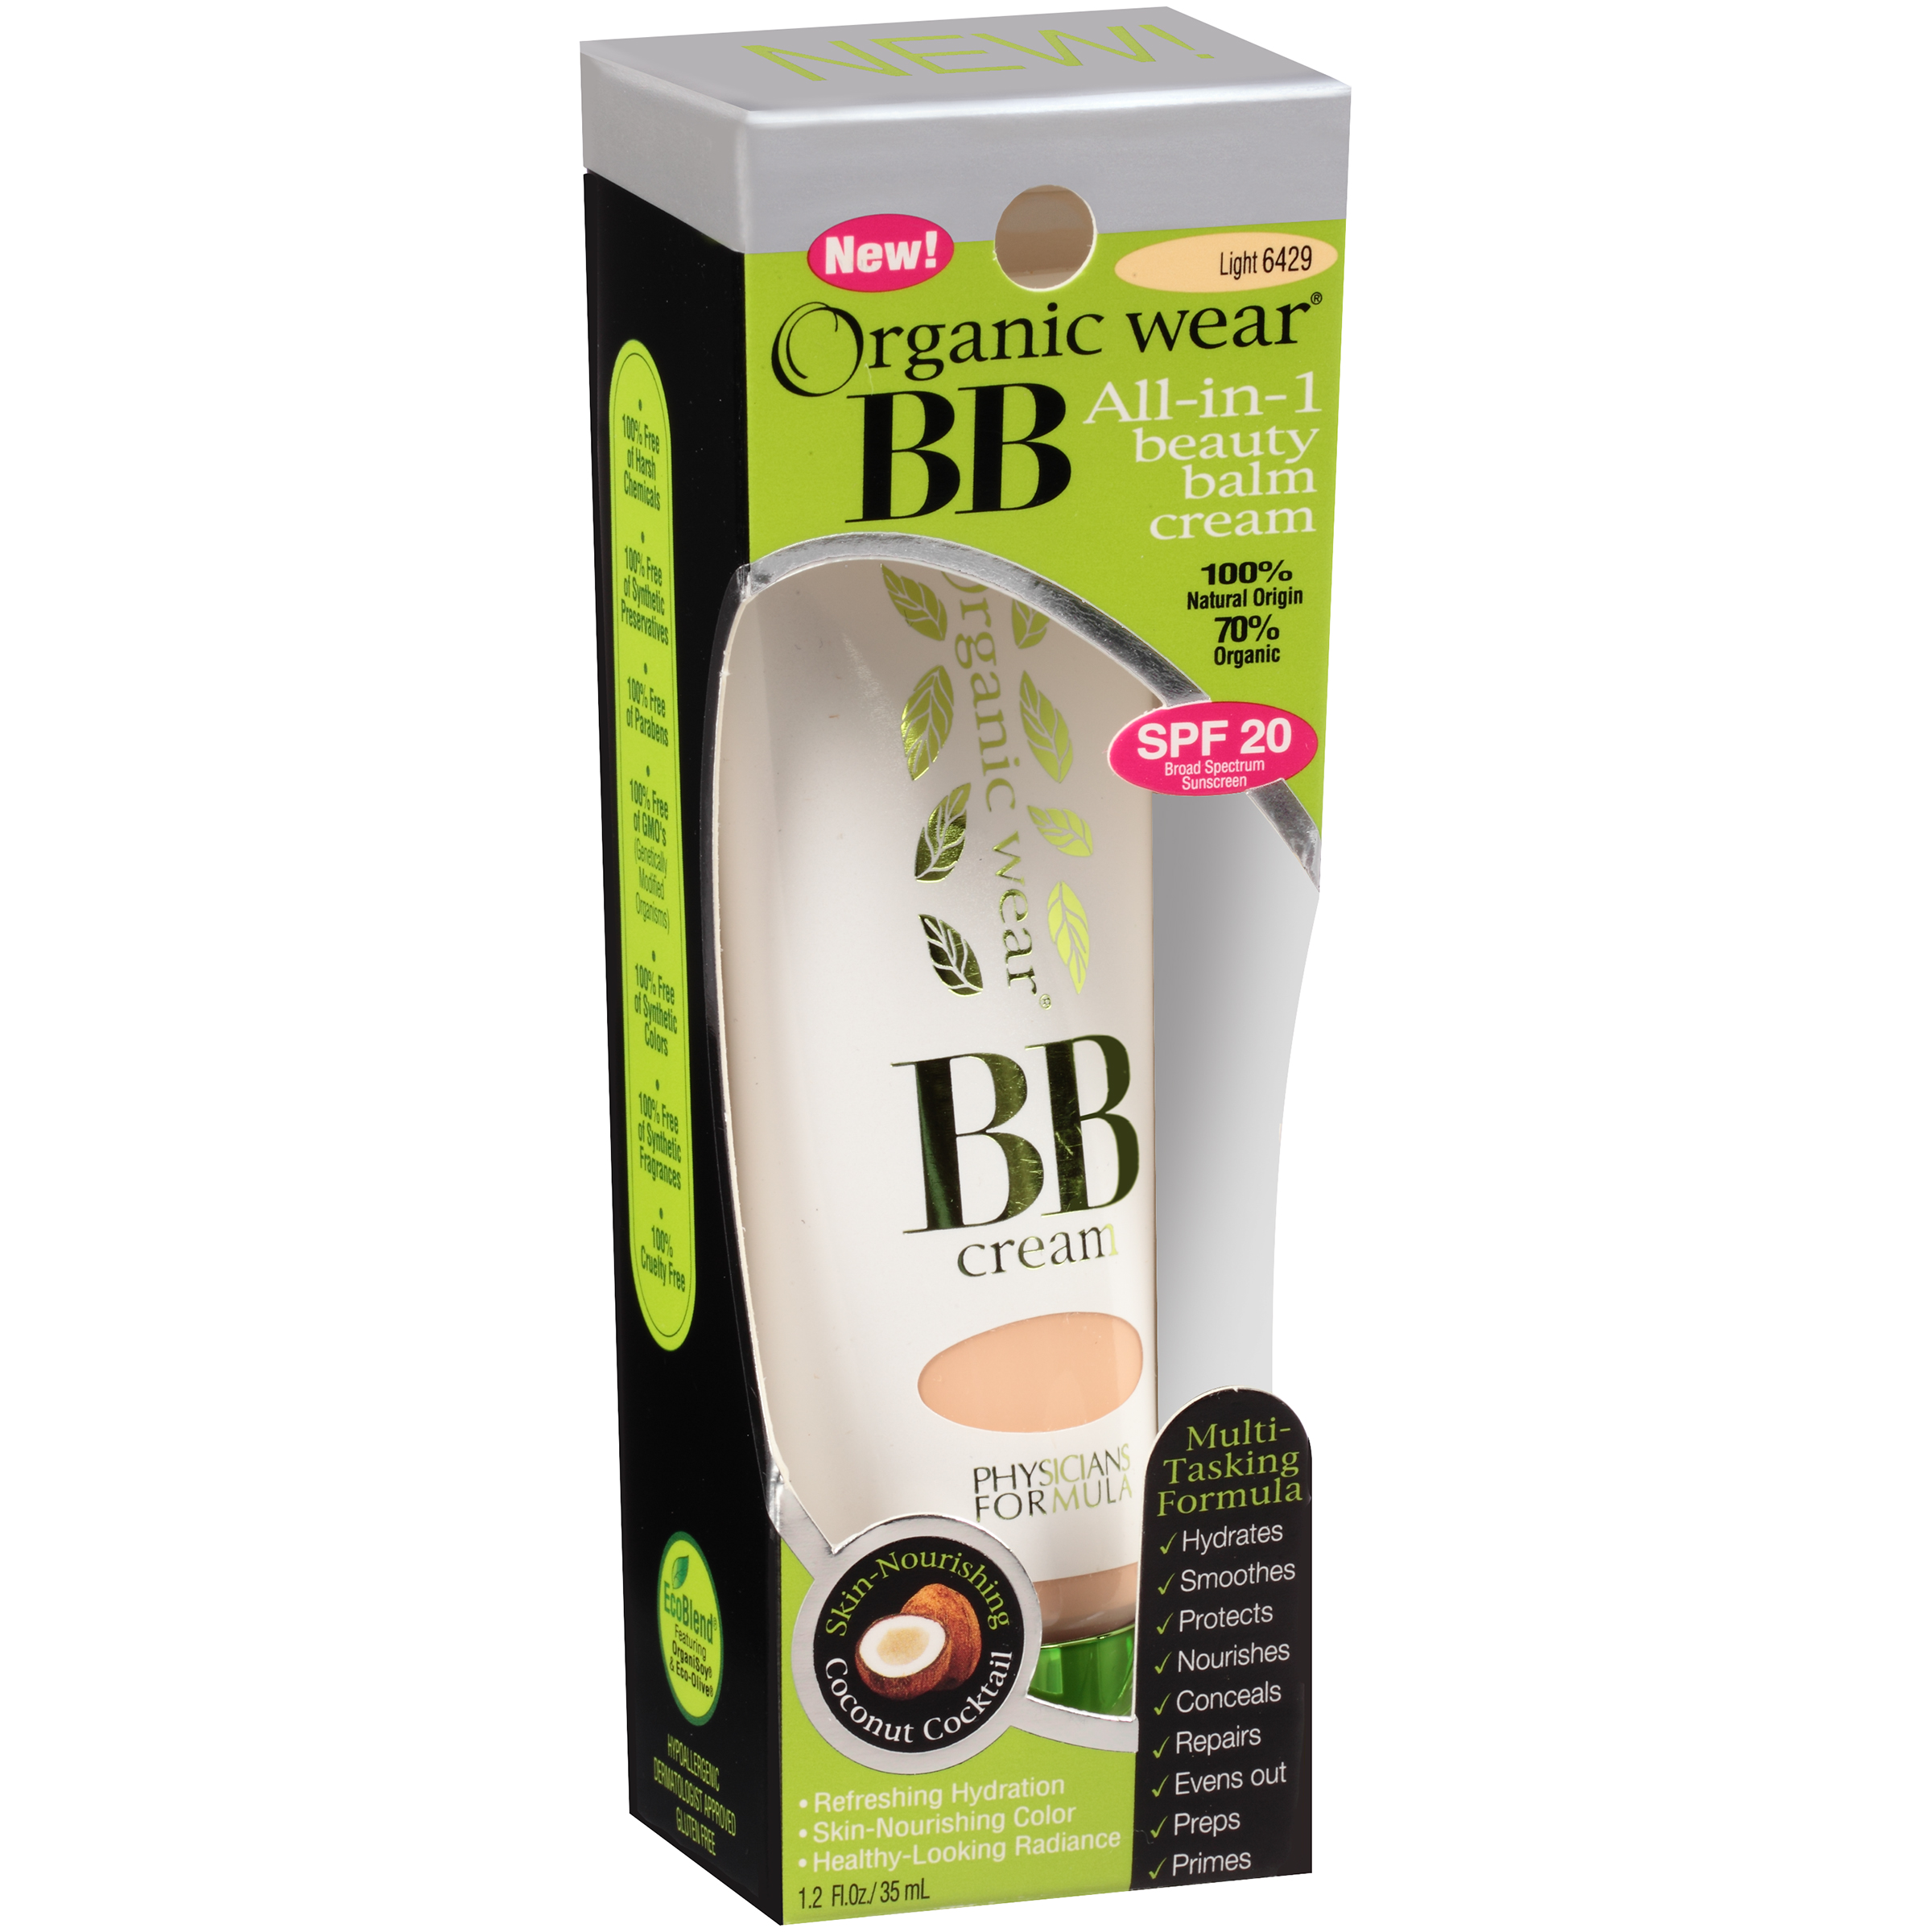 Physicians Formula Organic Wear 100% Natural Origin BB Beauty Balm Cream 1.2 Oz.